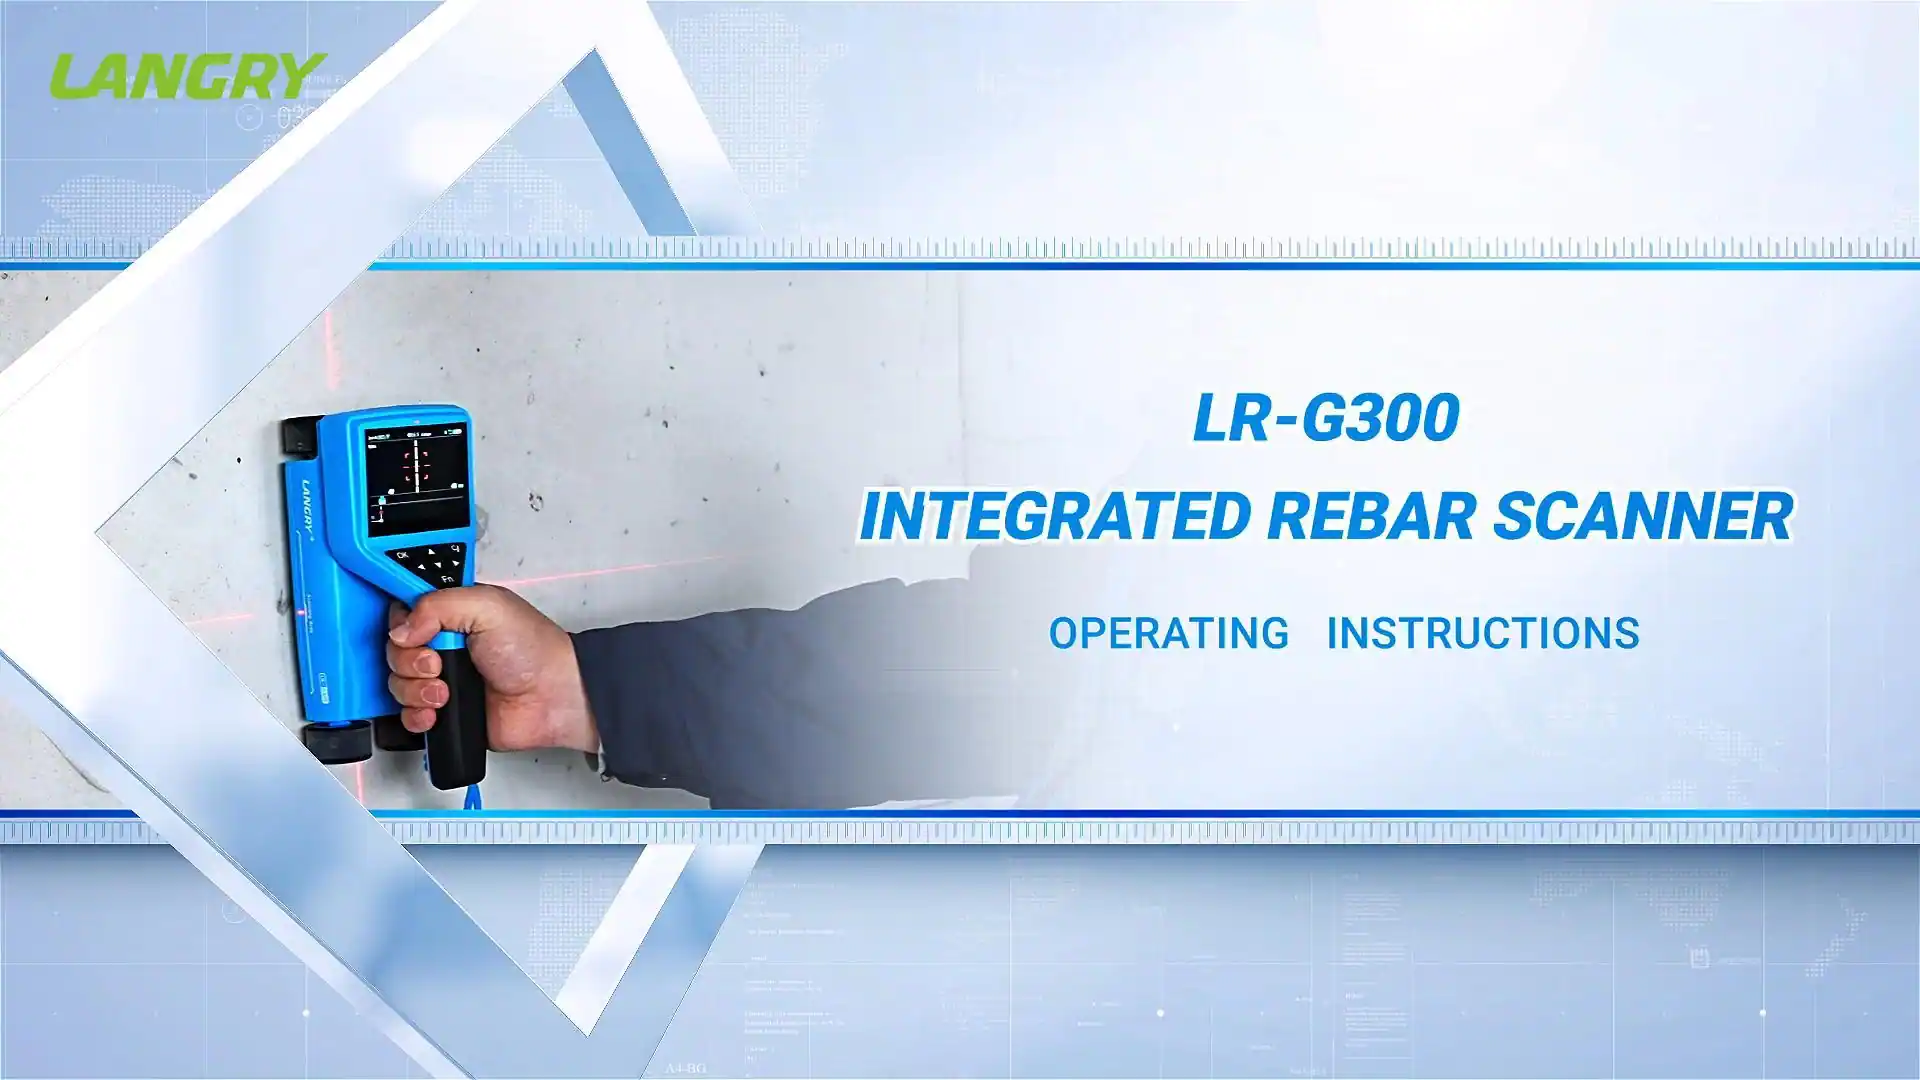 LR-G300 Integrated Rebar Scanner Operating Instructions